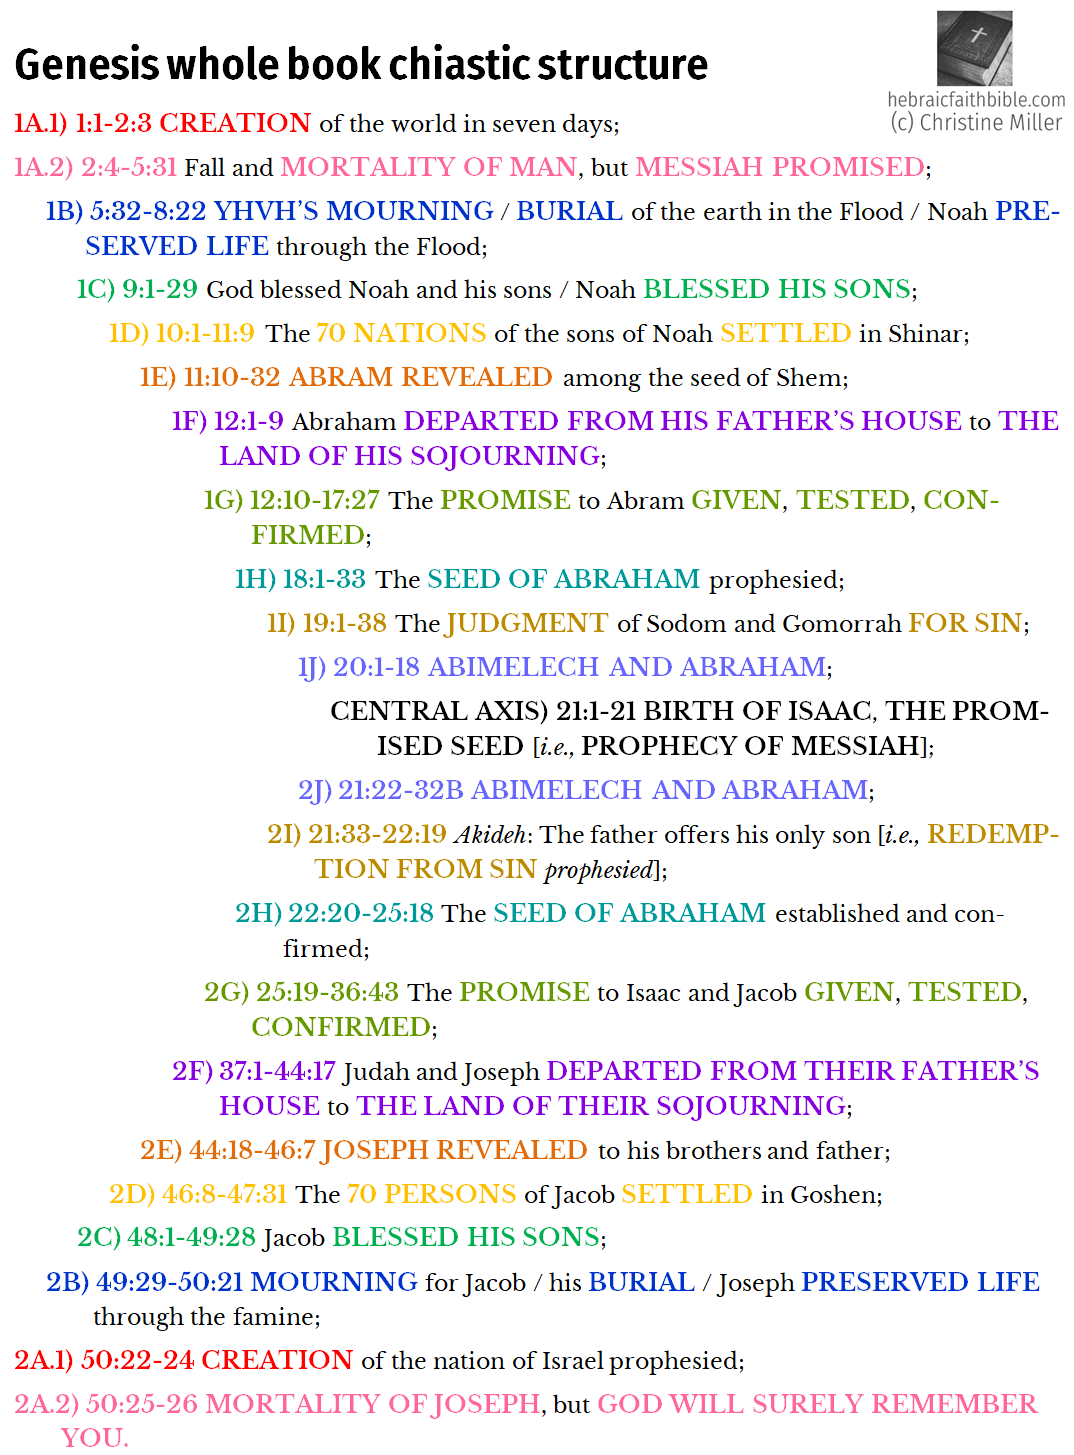 The book of Genesis Chiastic Structure | hebraicfaithbible.com